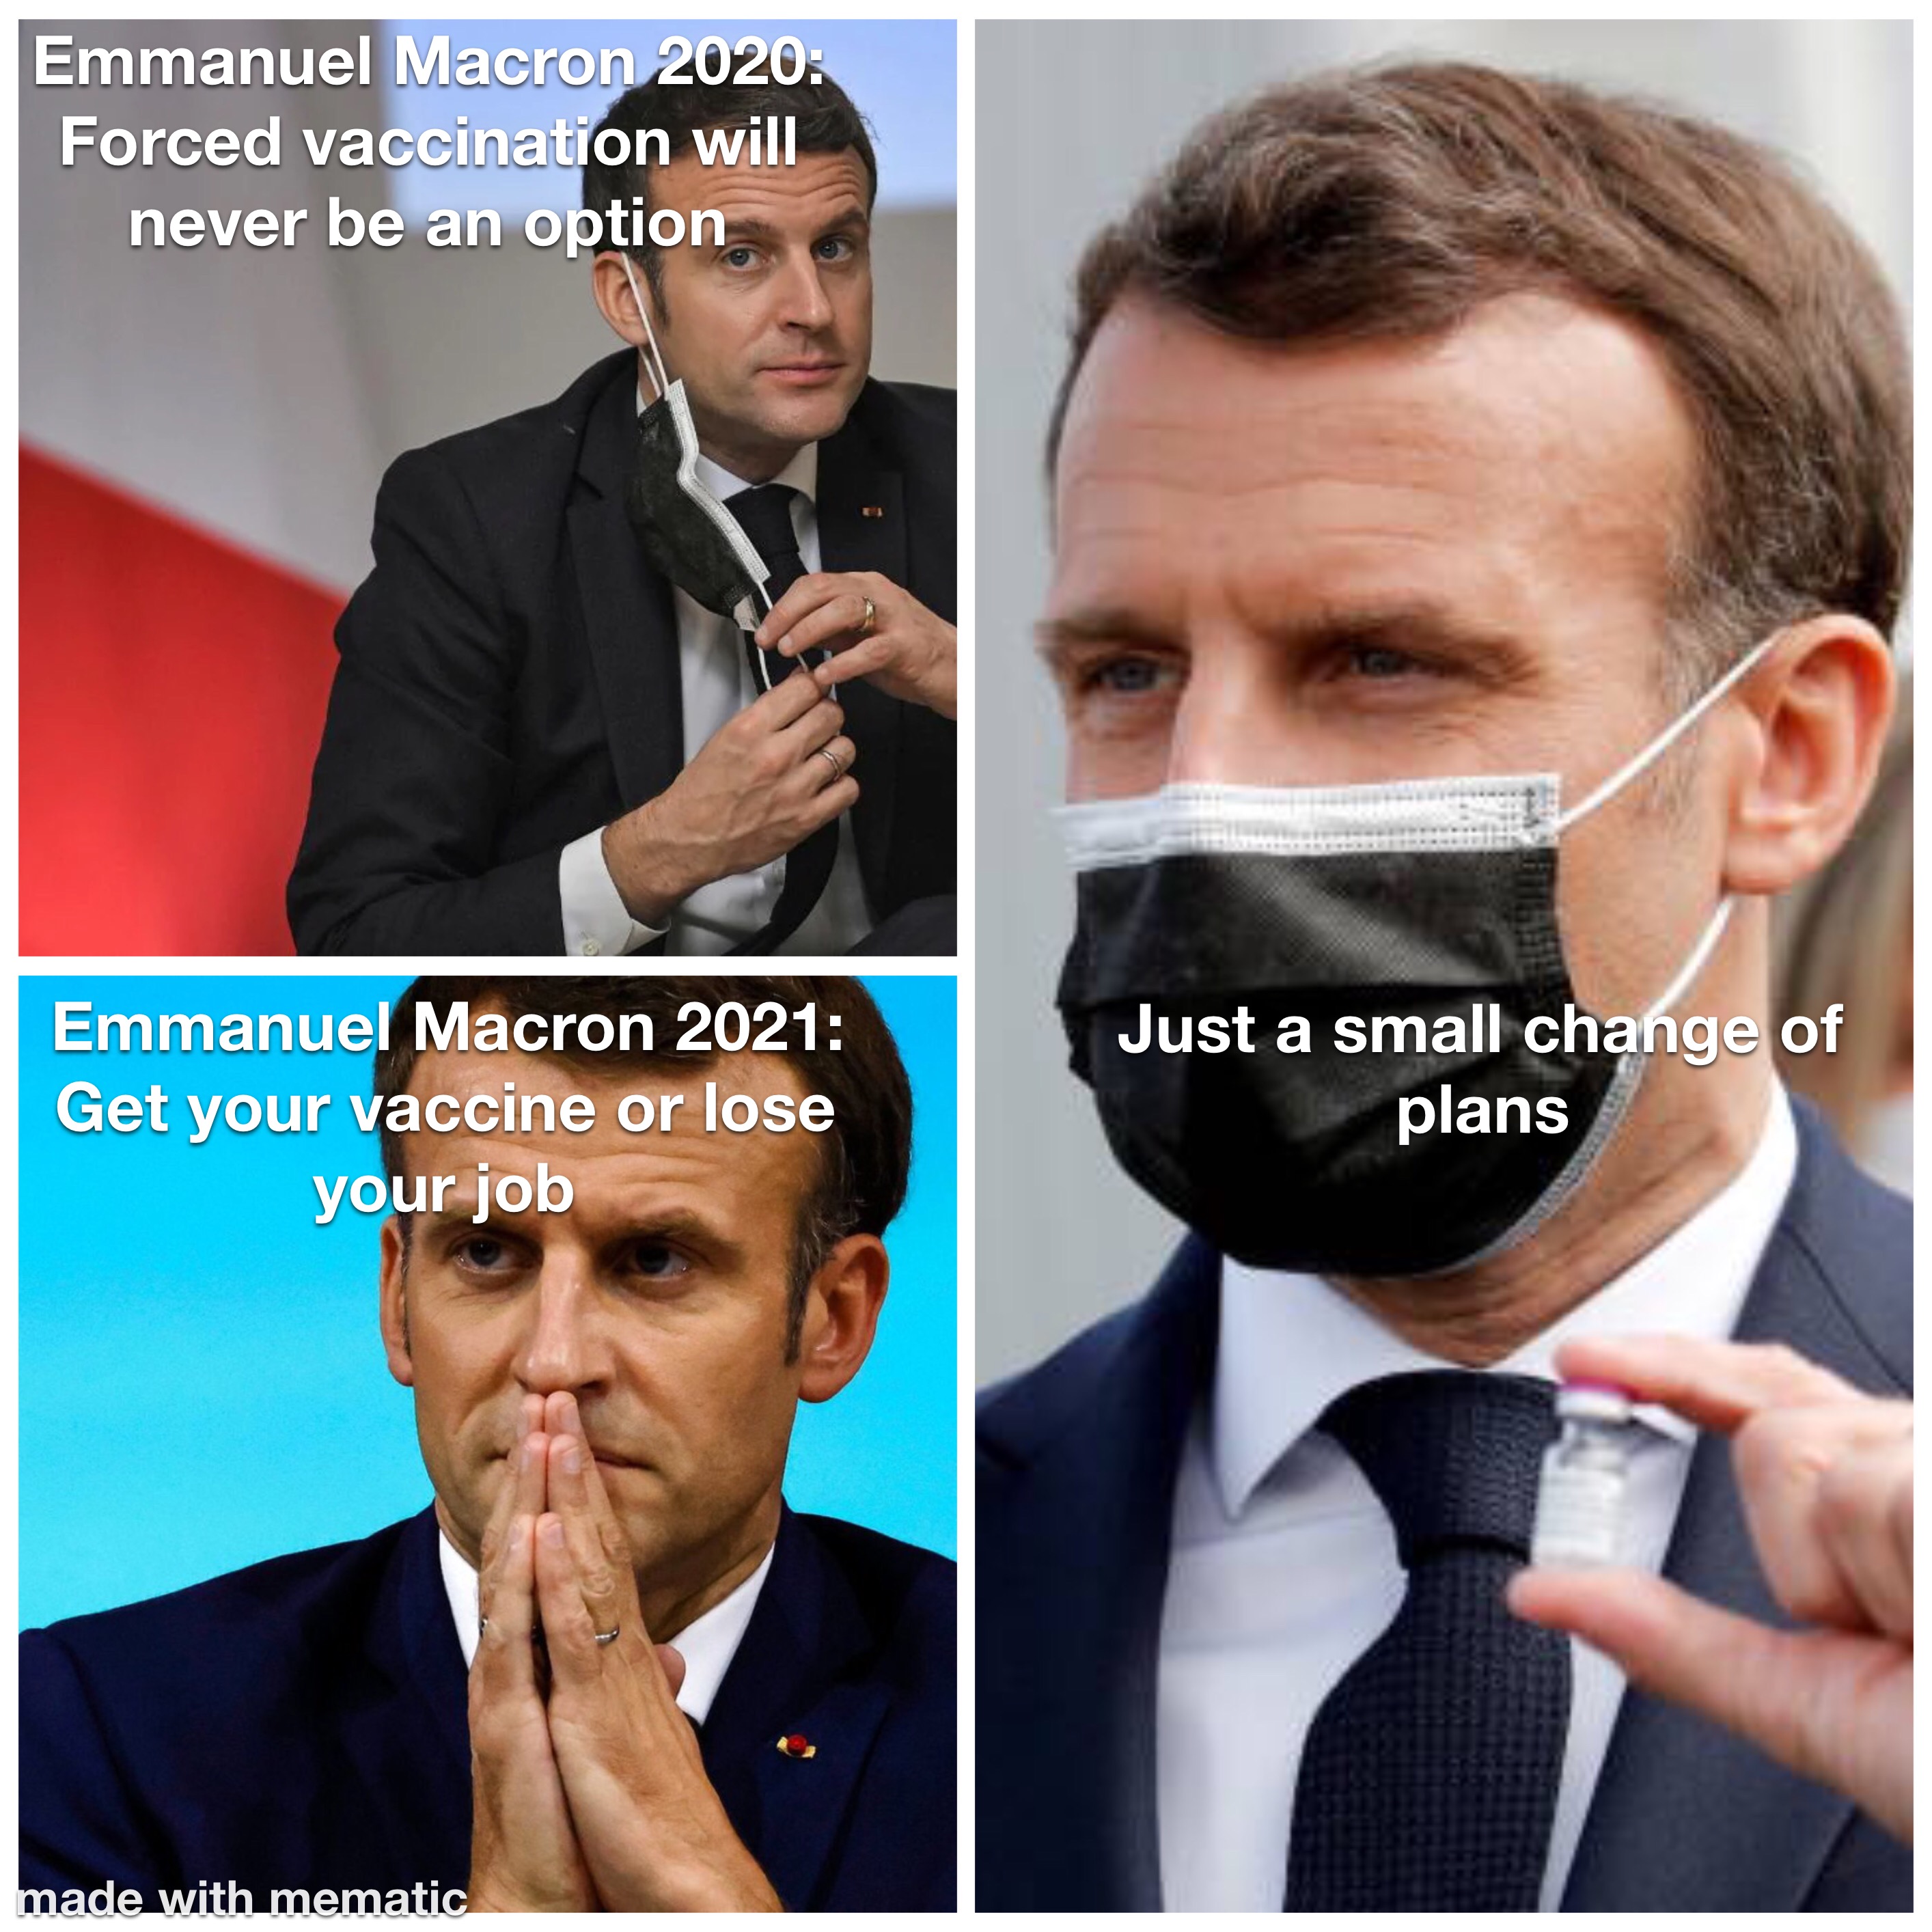 Macron vs. Macron 